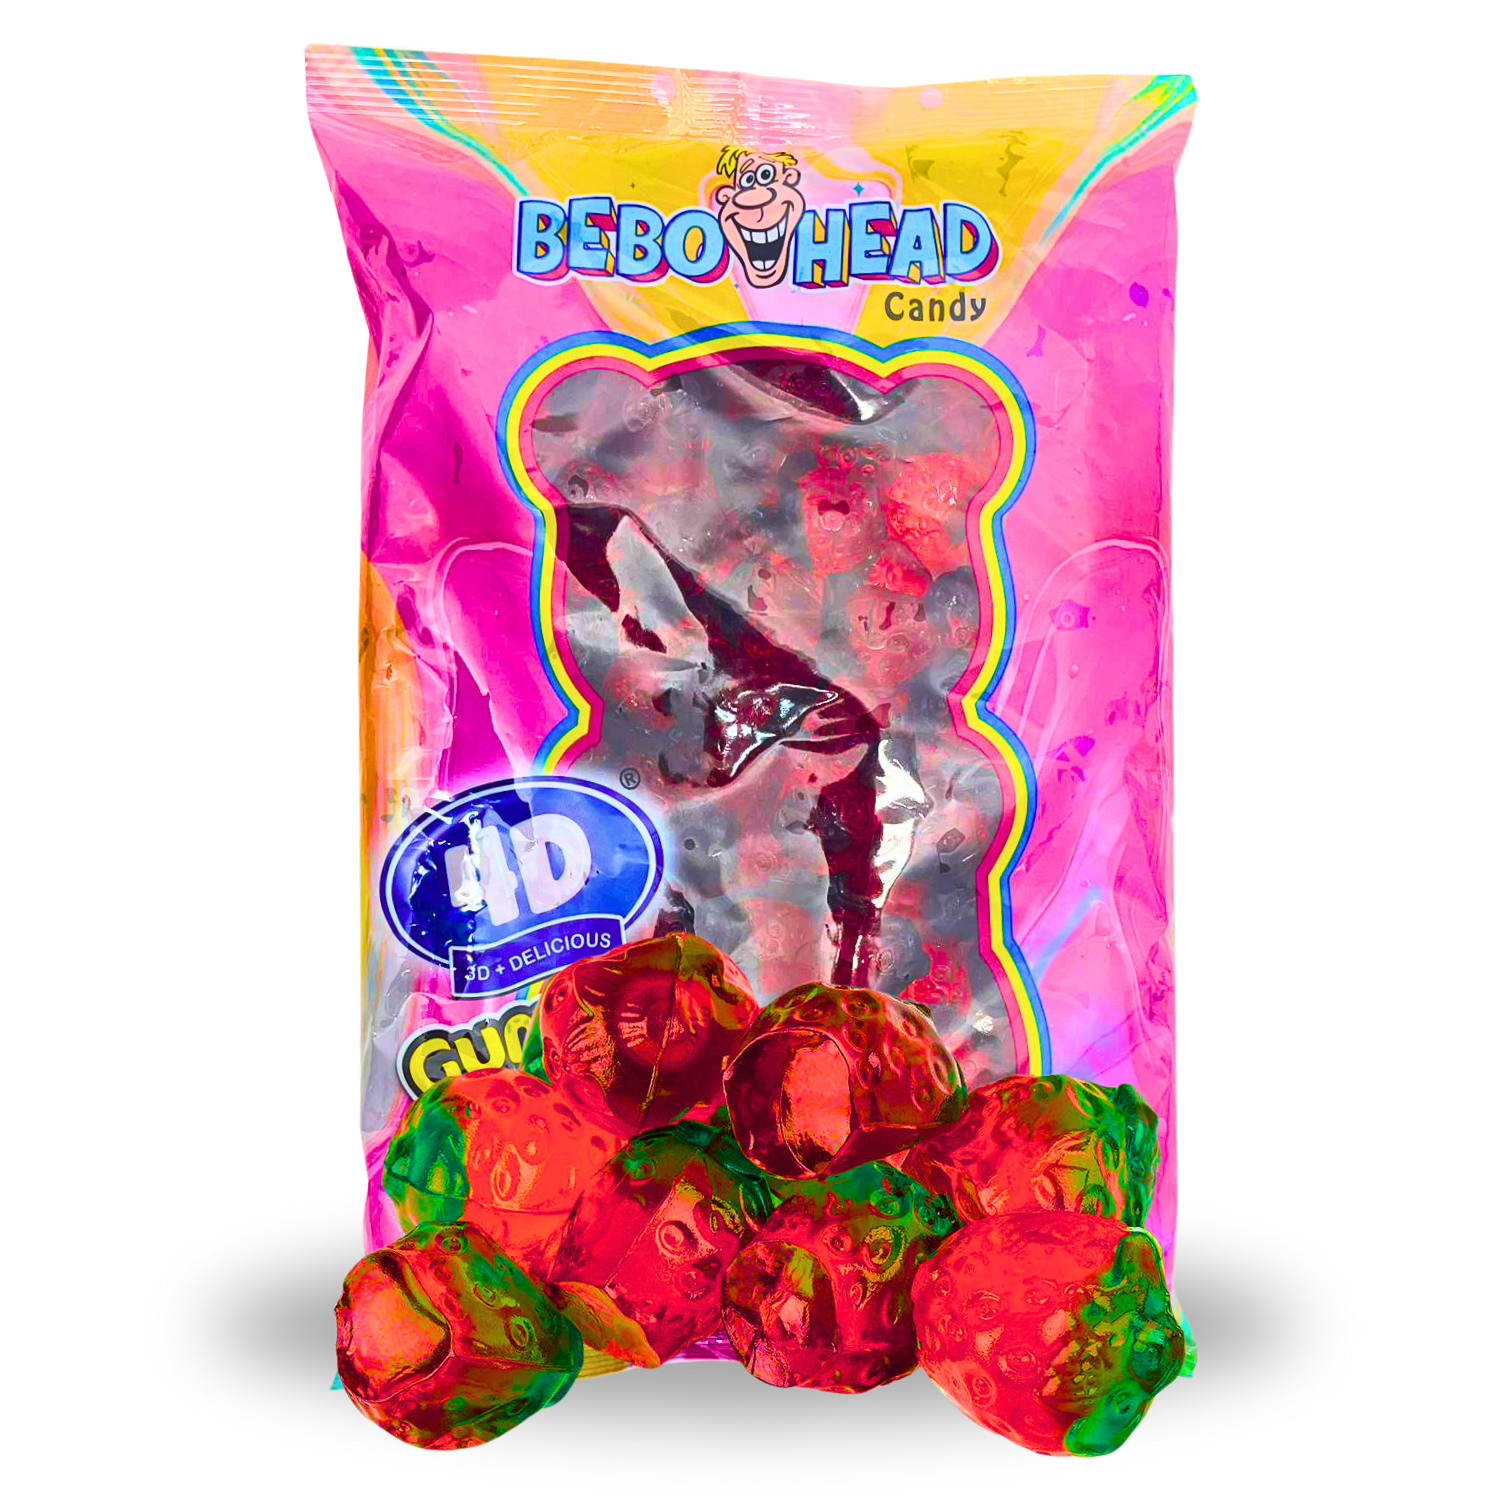 4D Gummy Strawberries